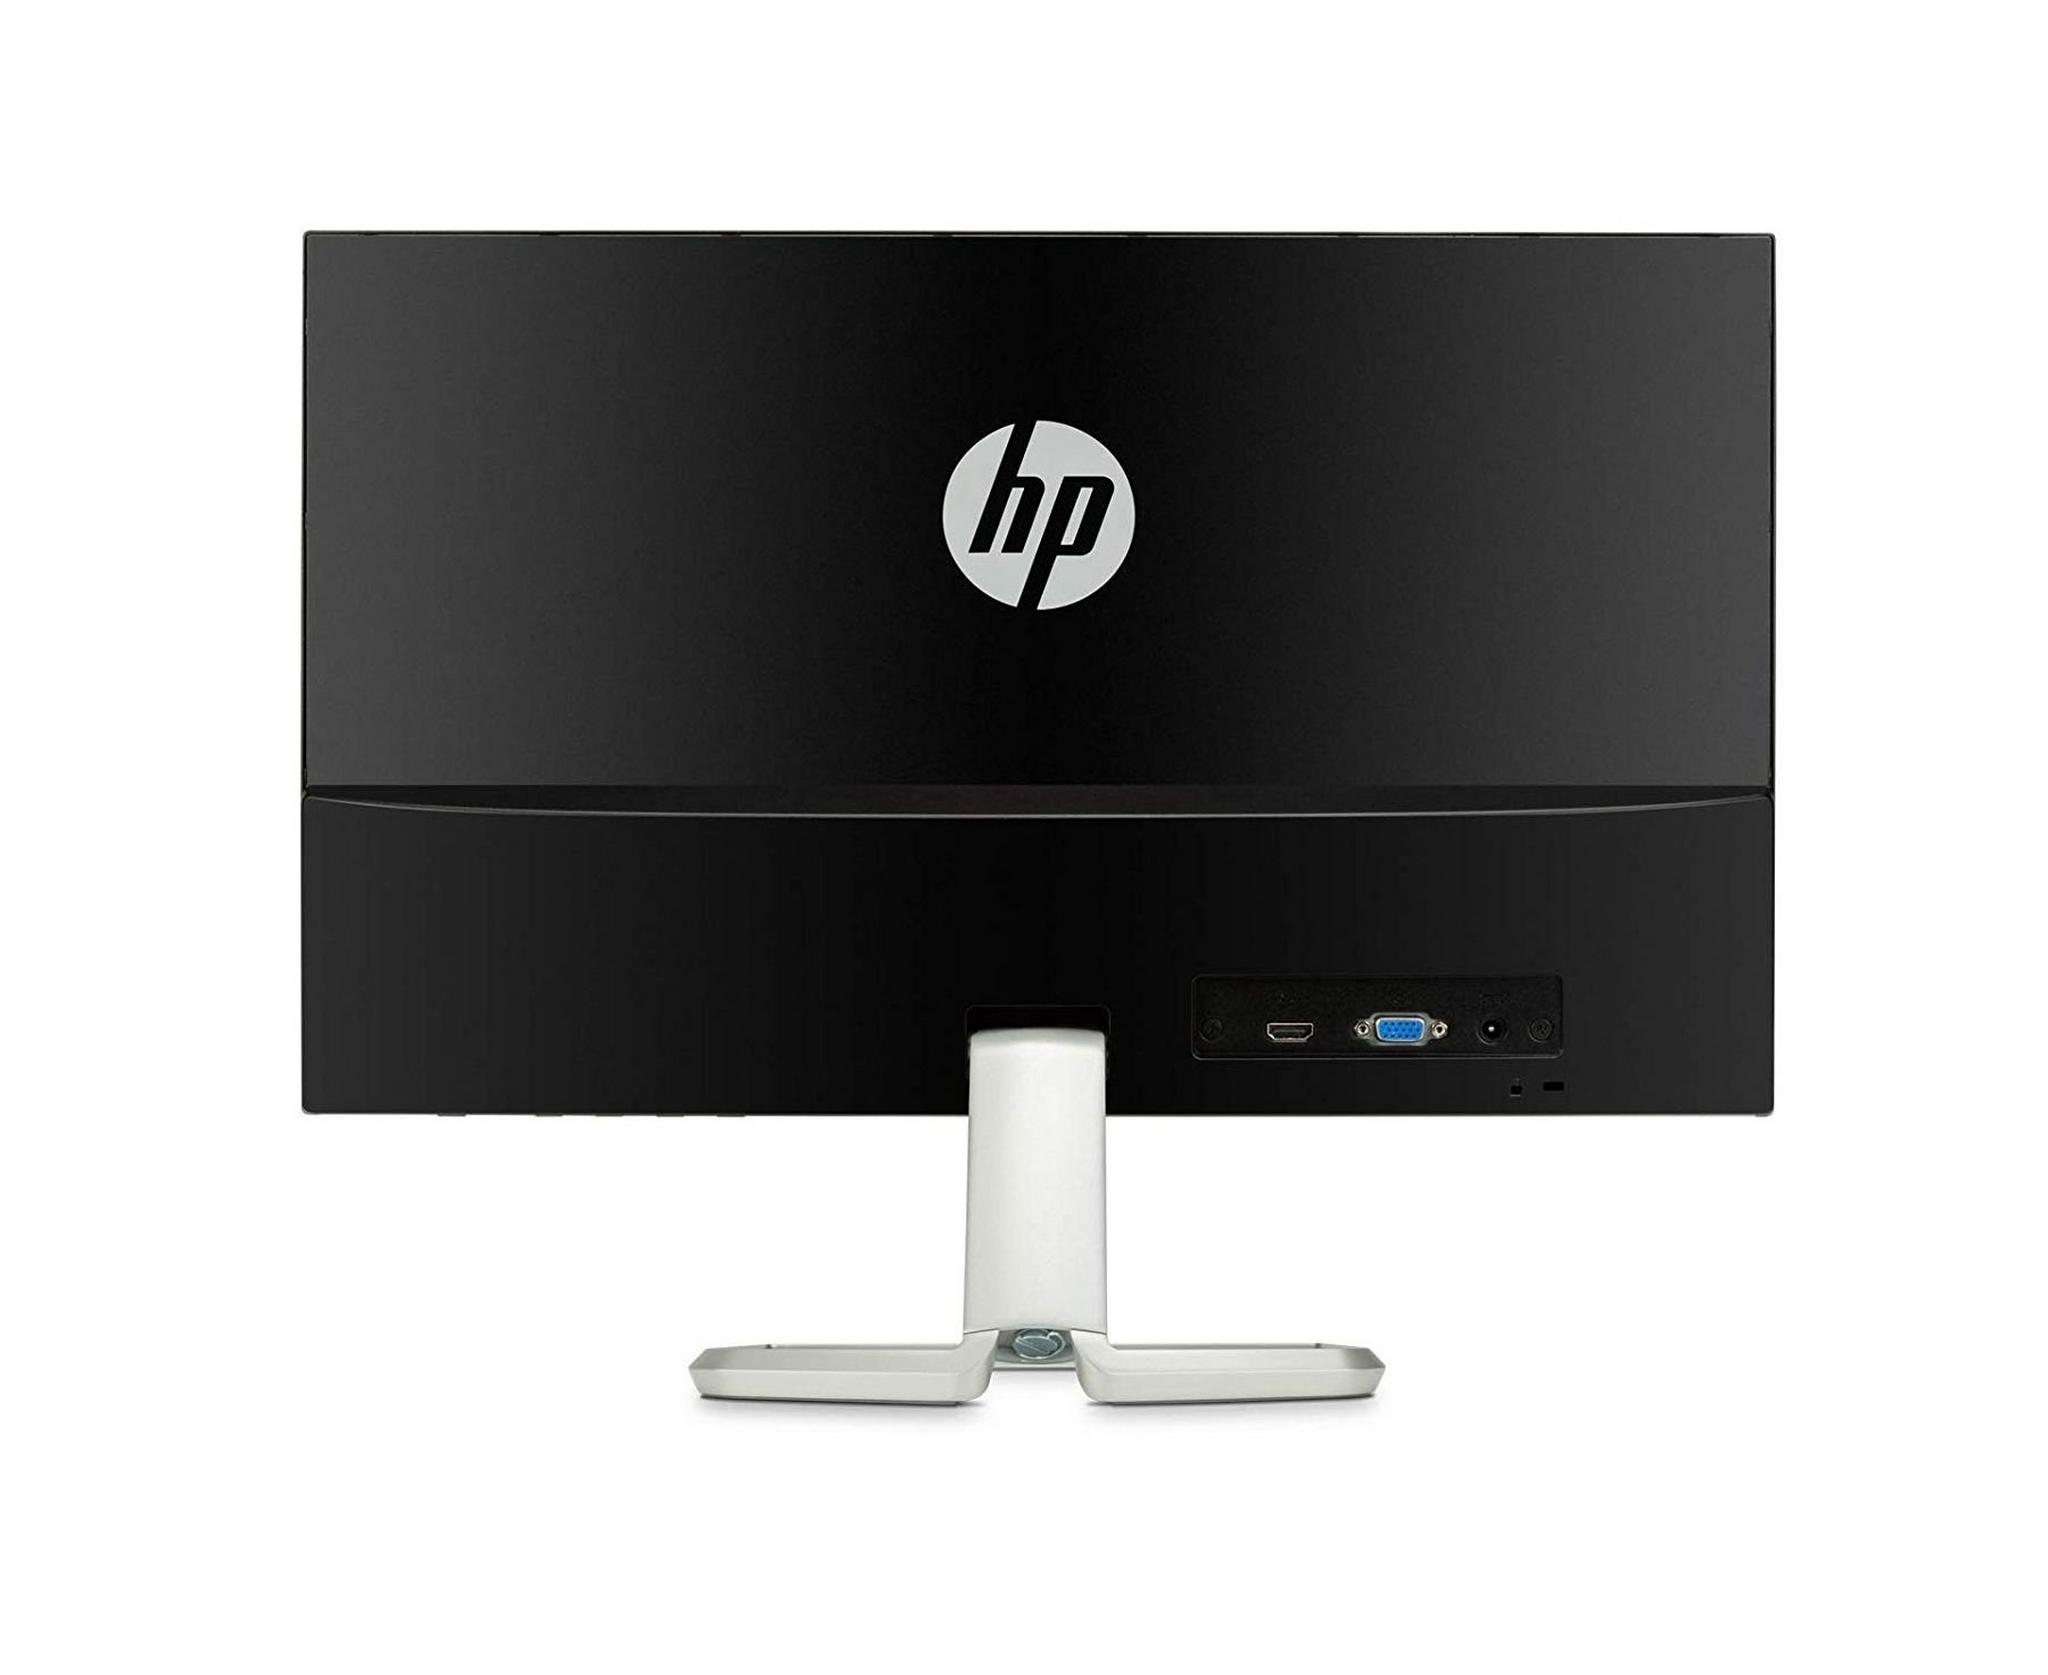 HP 22-inch FHD IPS Monitor (2XN58AA#A2N) - Black